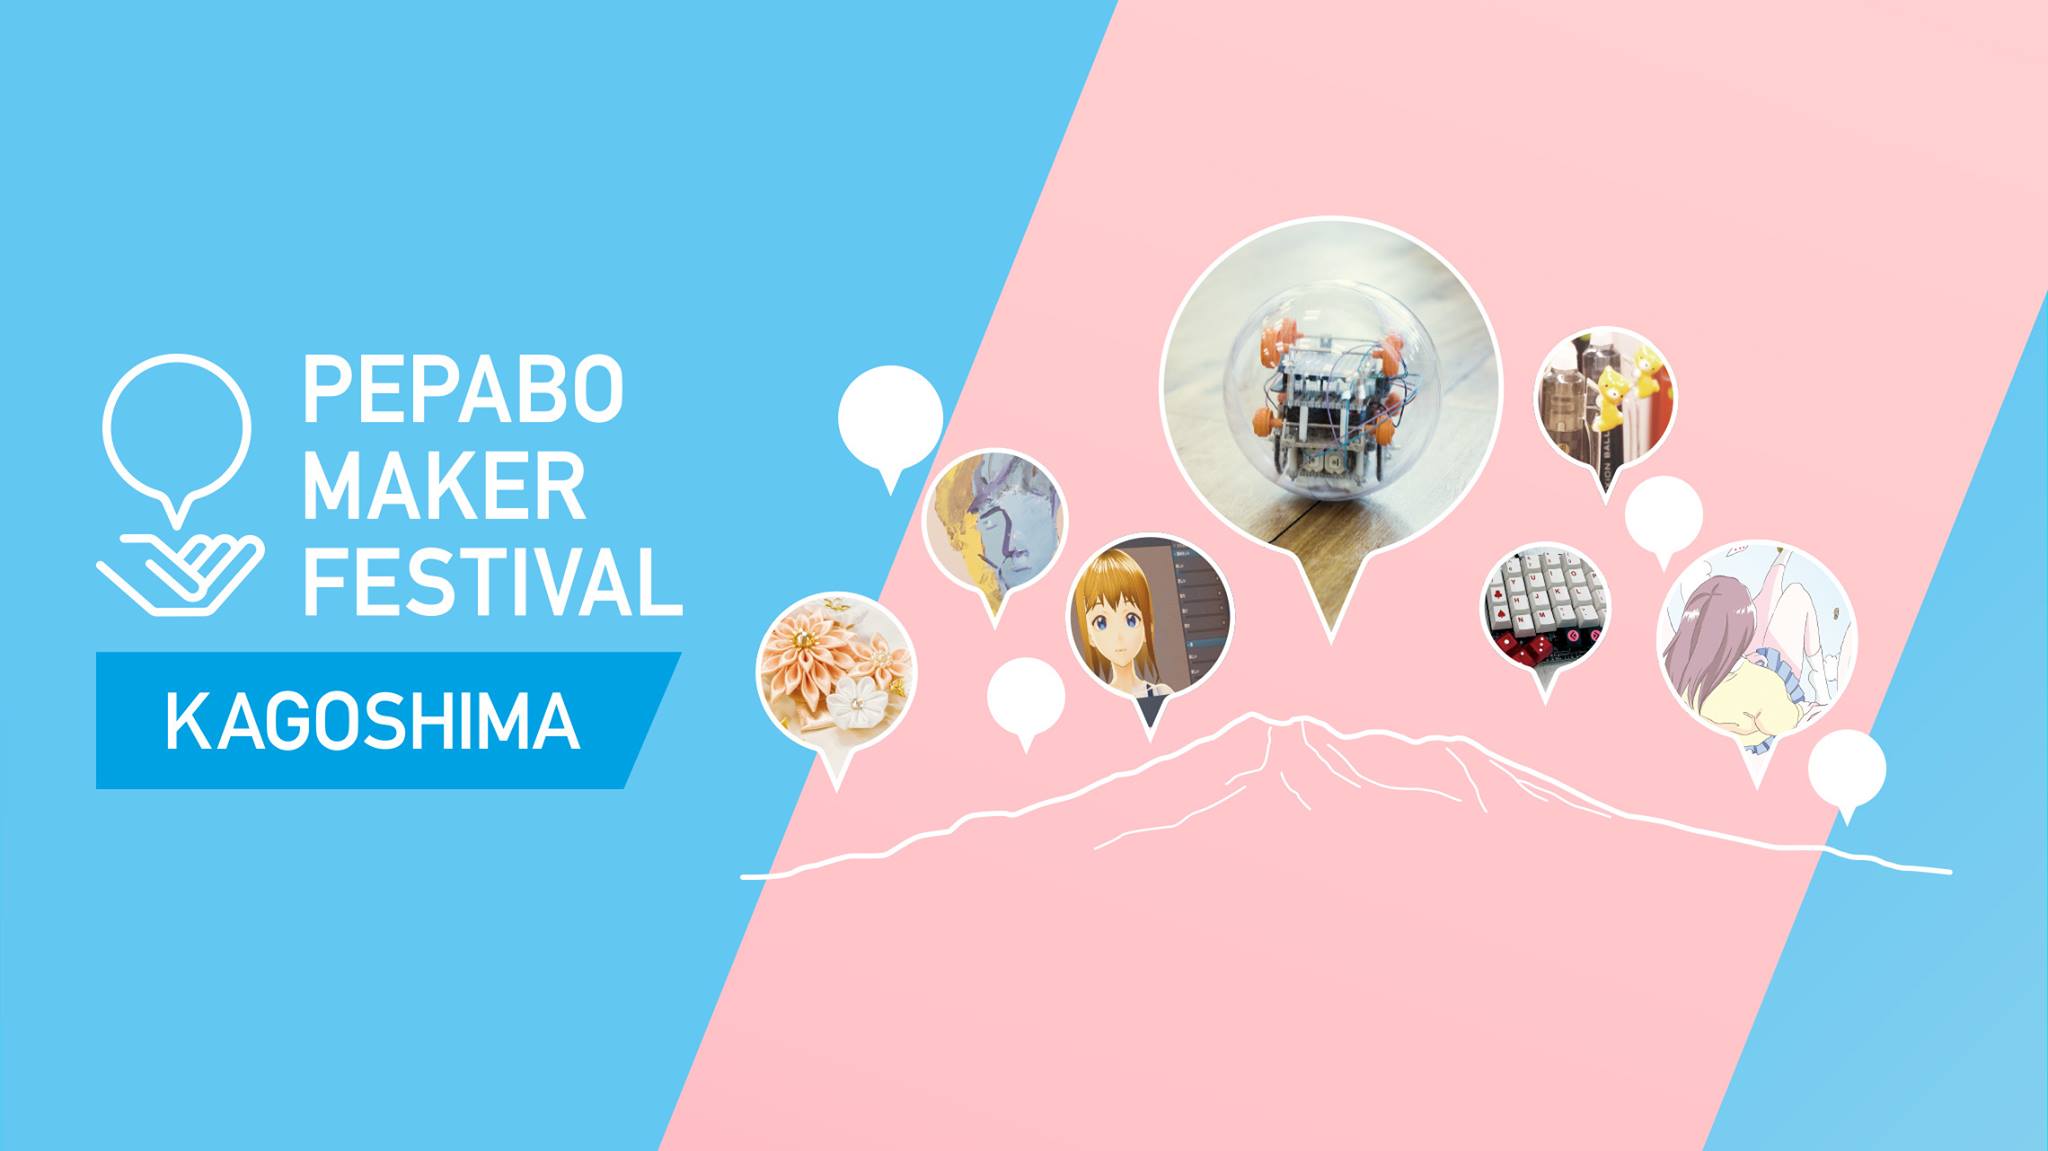 Pepabo Maker Festival Kagoshima 1st